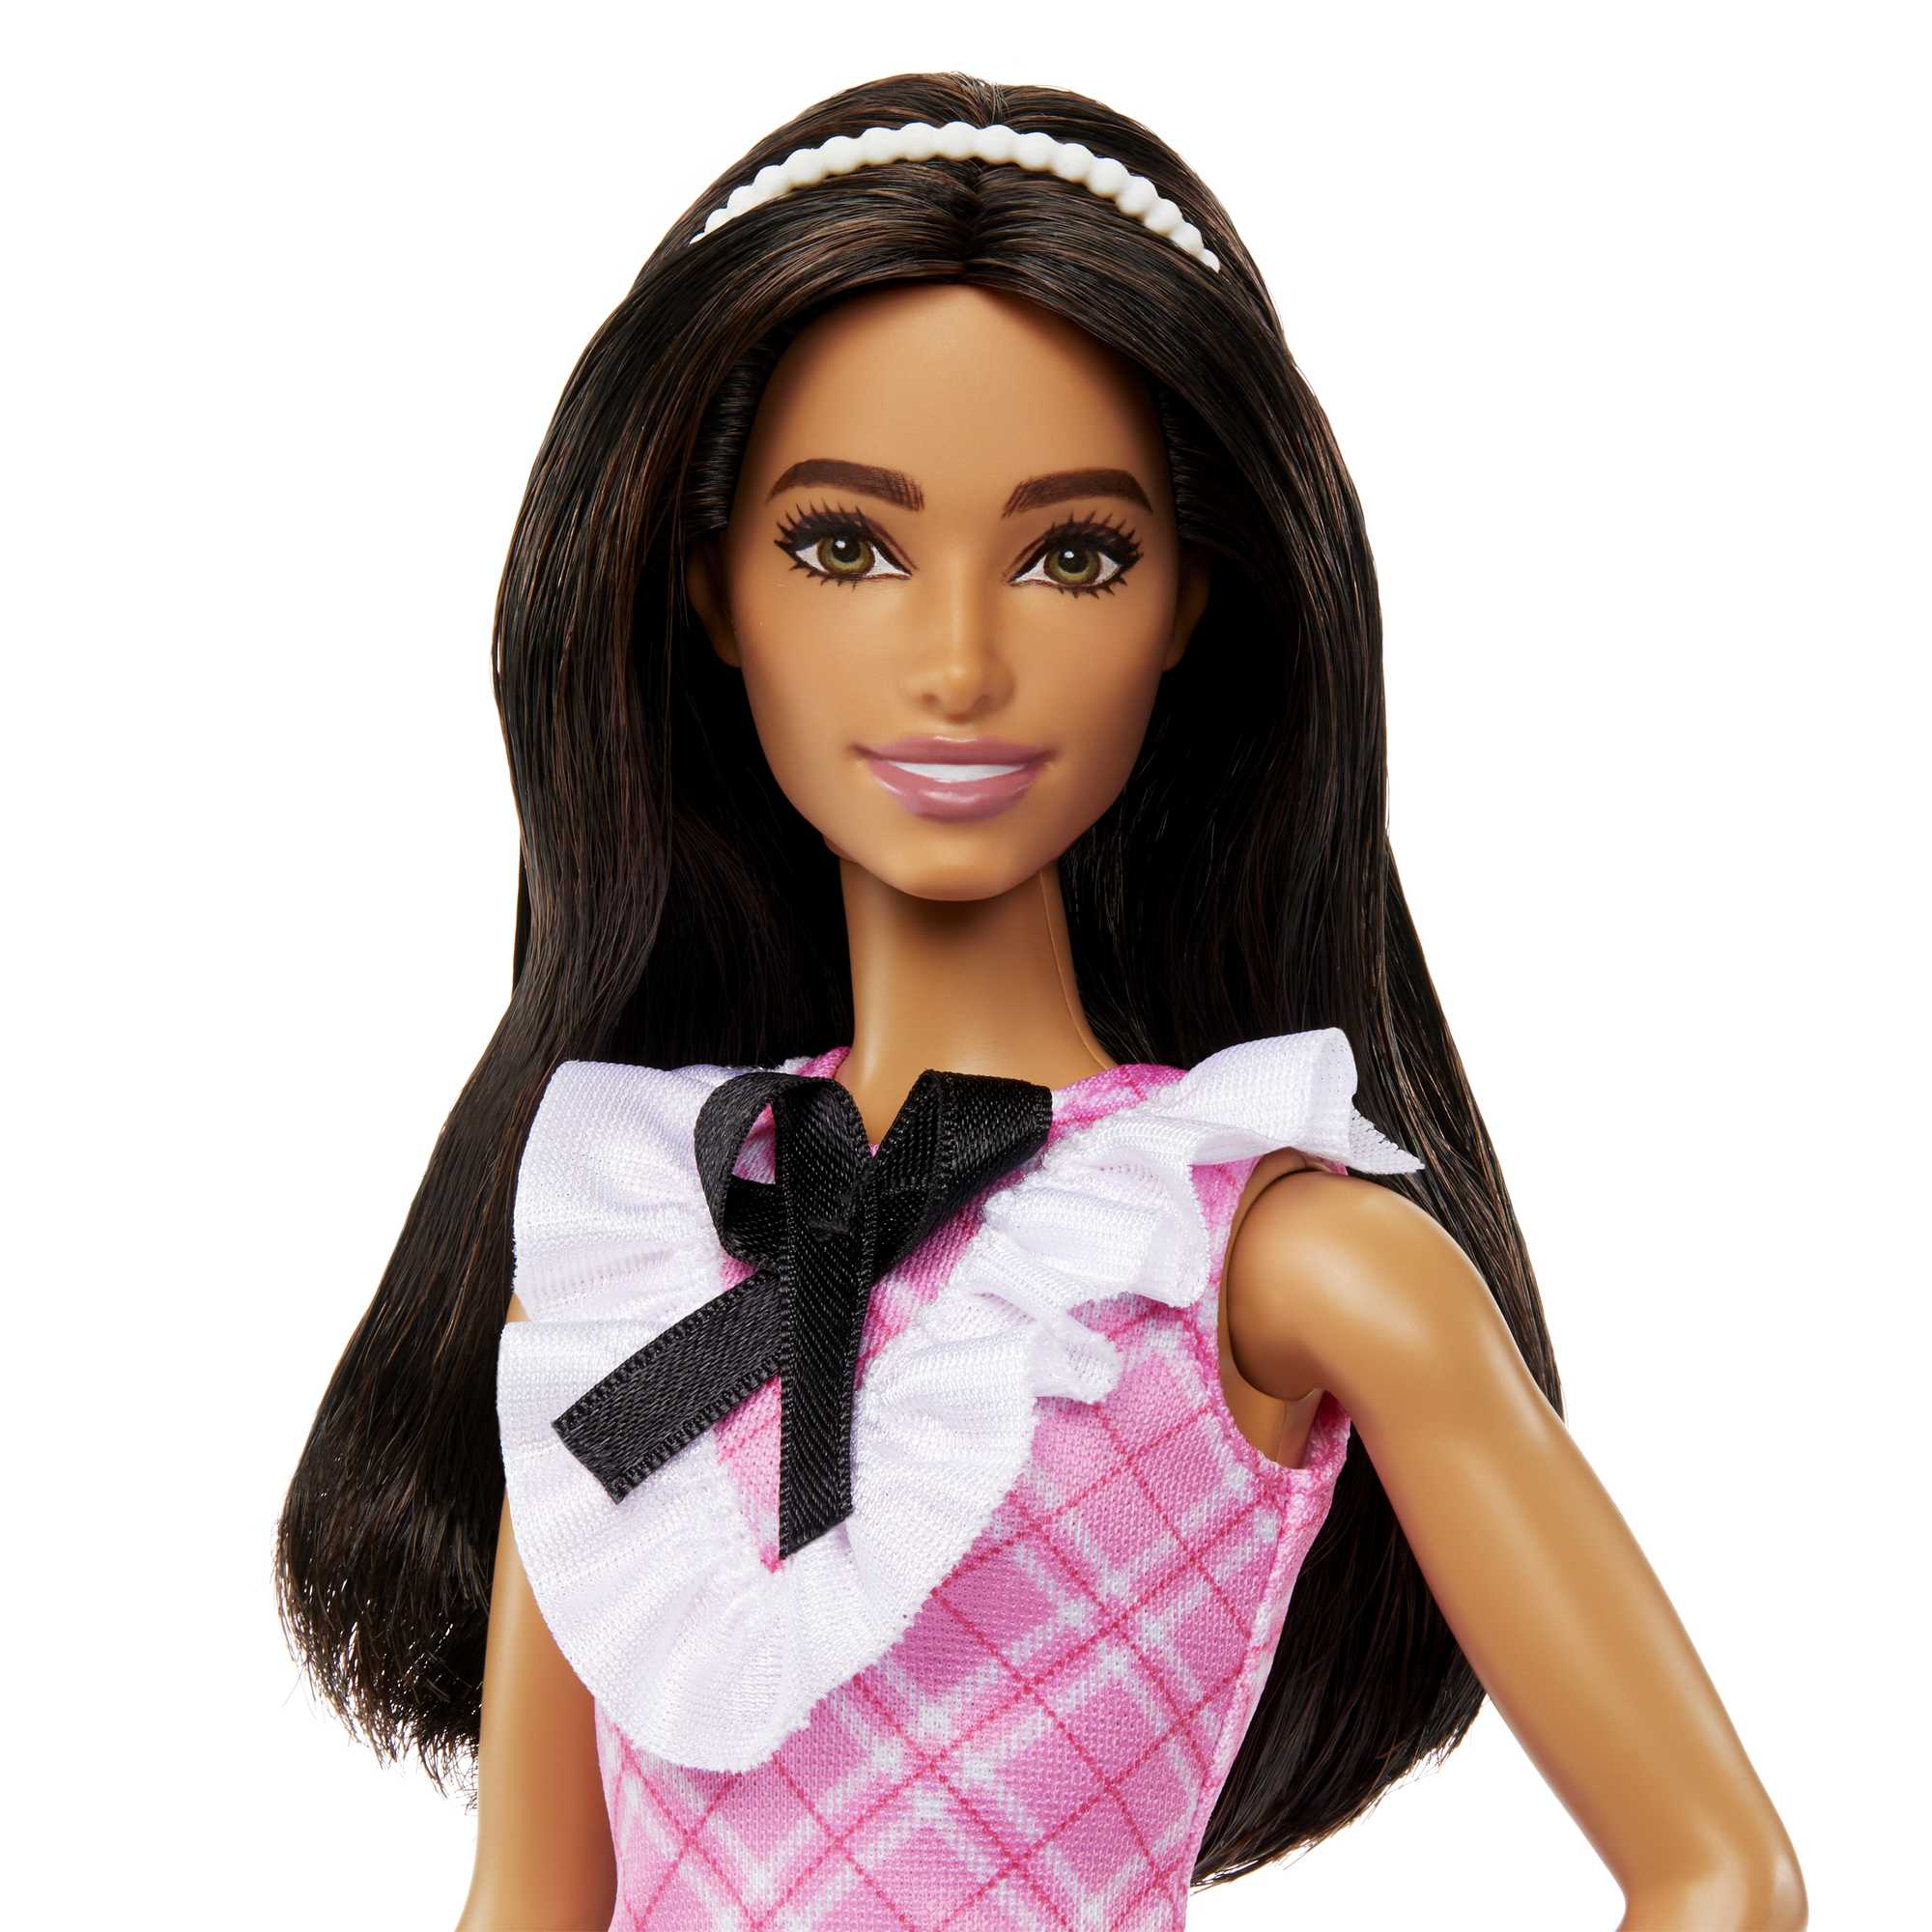 Muñeca Barbie Fashionistas 201 - HJT00 BarbiePedia